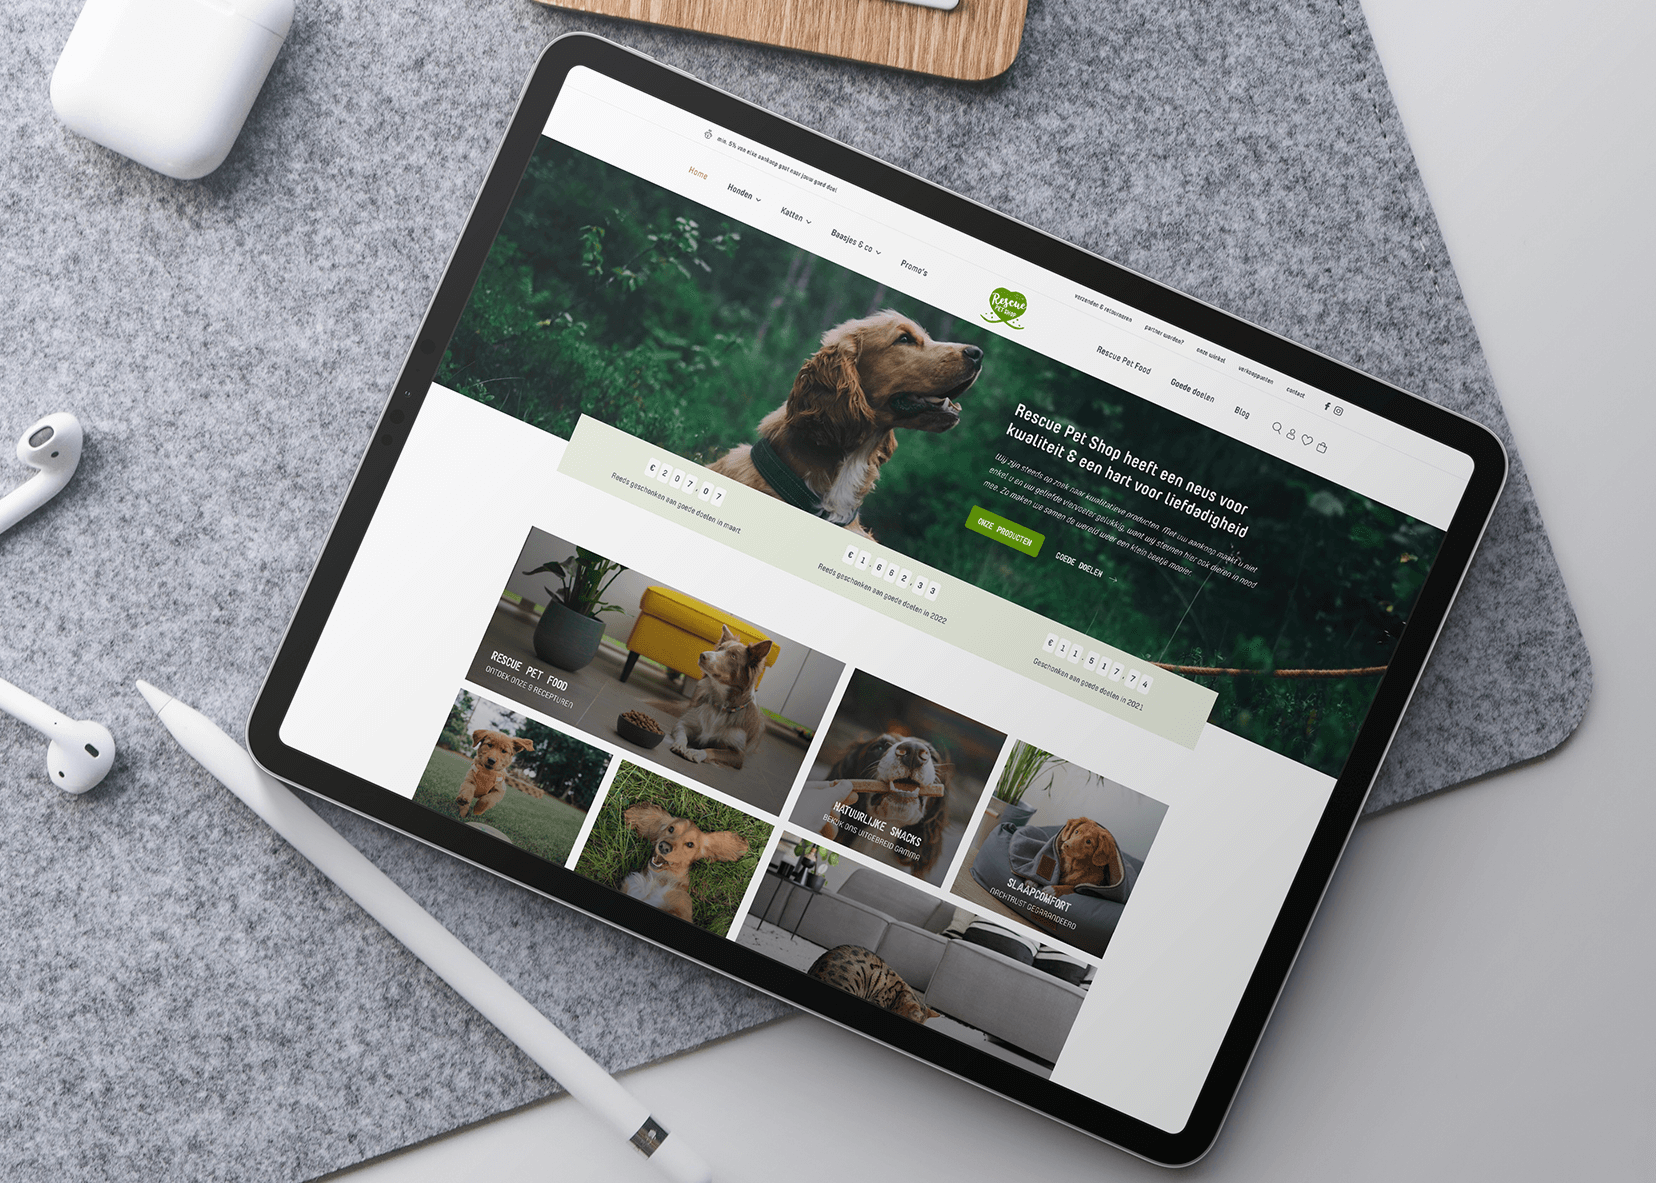 Project Rescue Pet Shop | lsDevign - Web Development en Webdesign op maat regio Lichtervelde